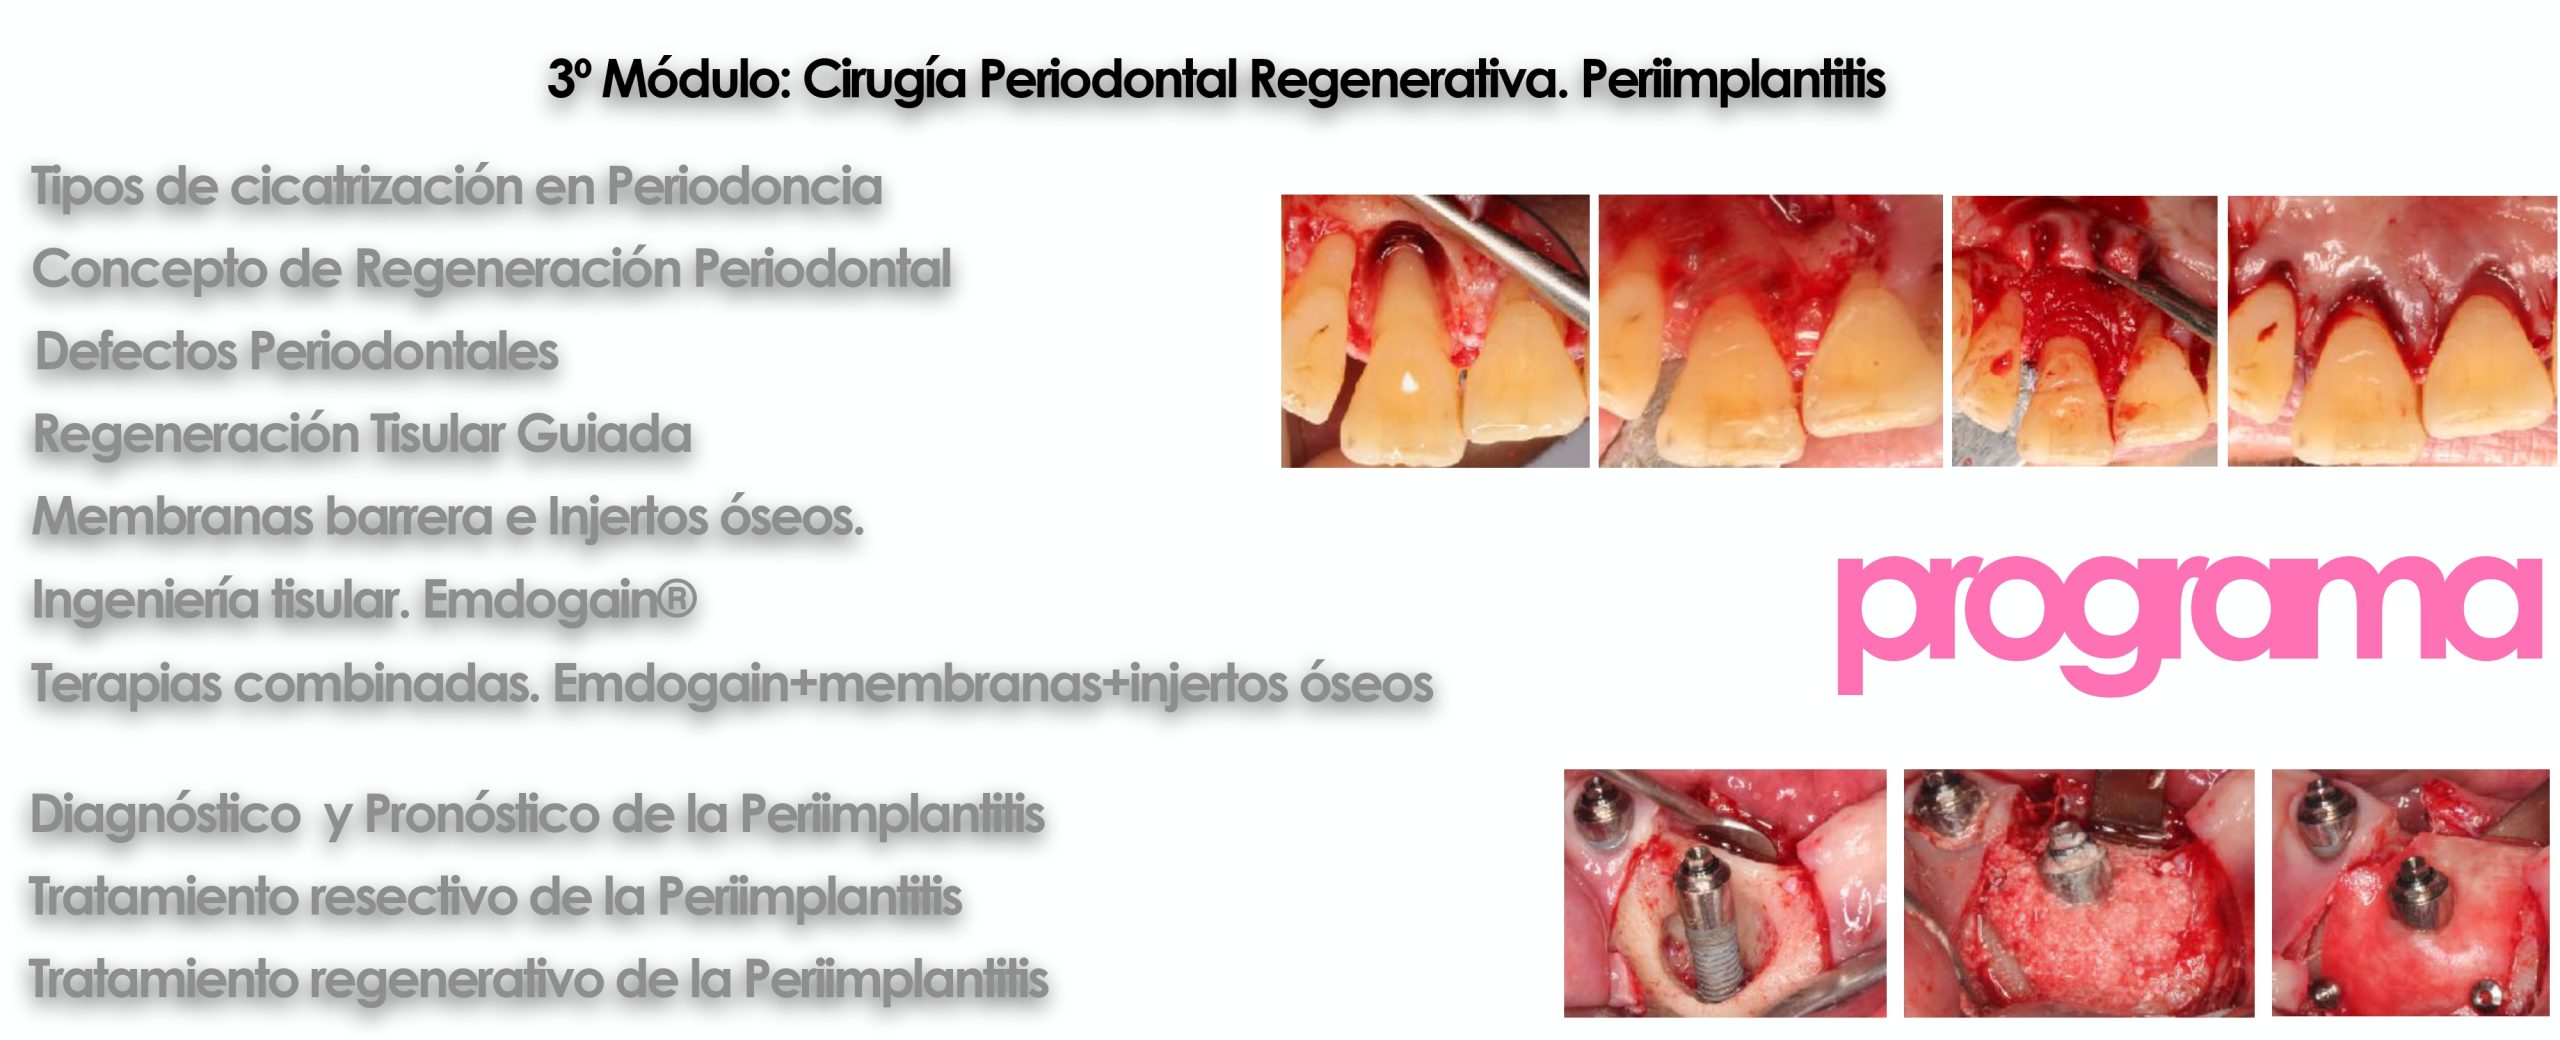 Curso cirugía periodontal e implantológica 2022|Clínica Dental Ortoperio